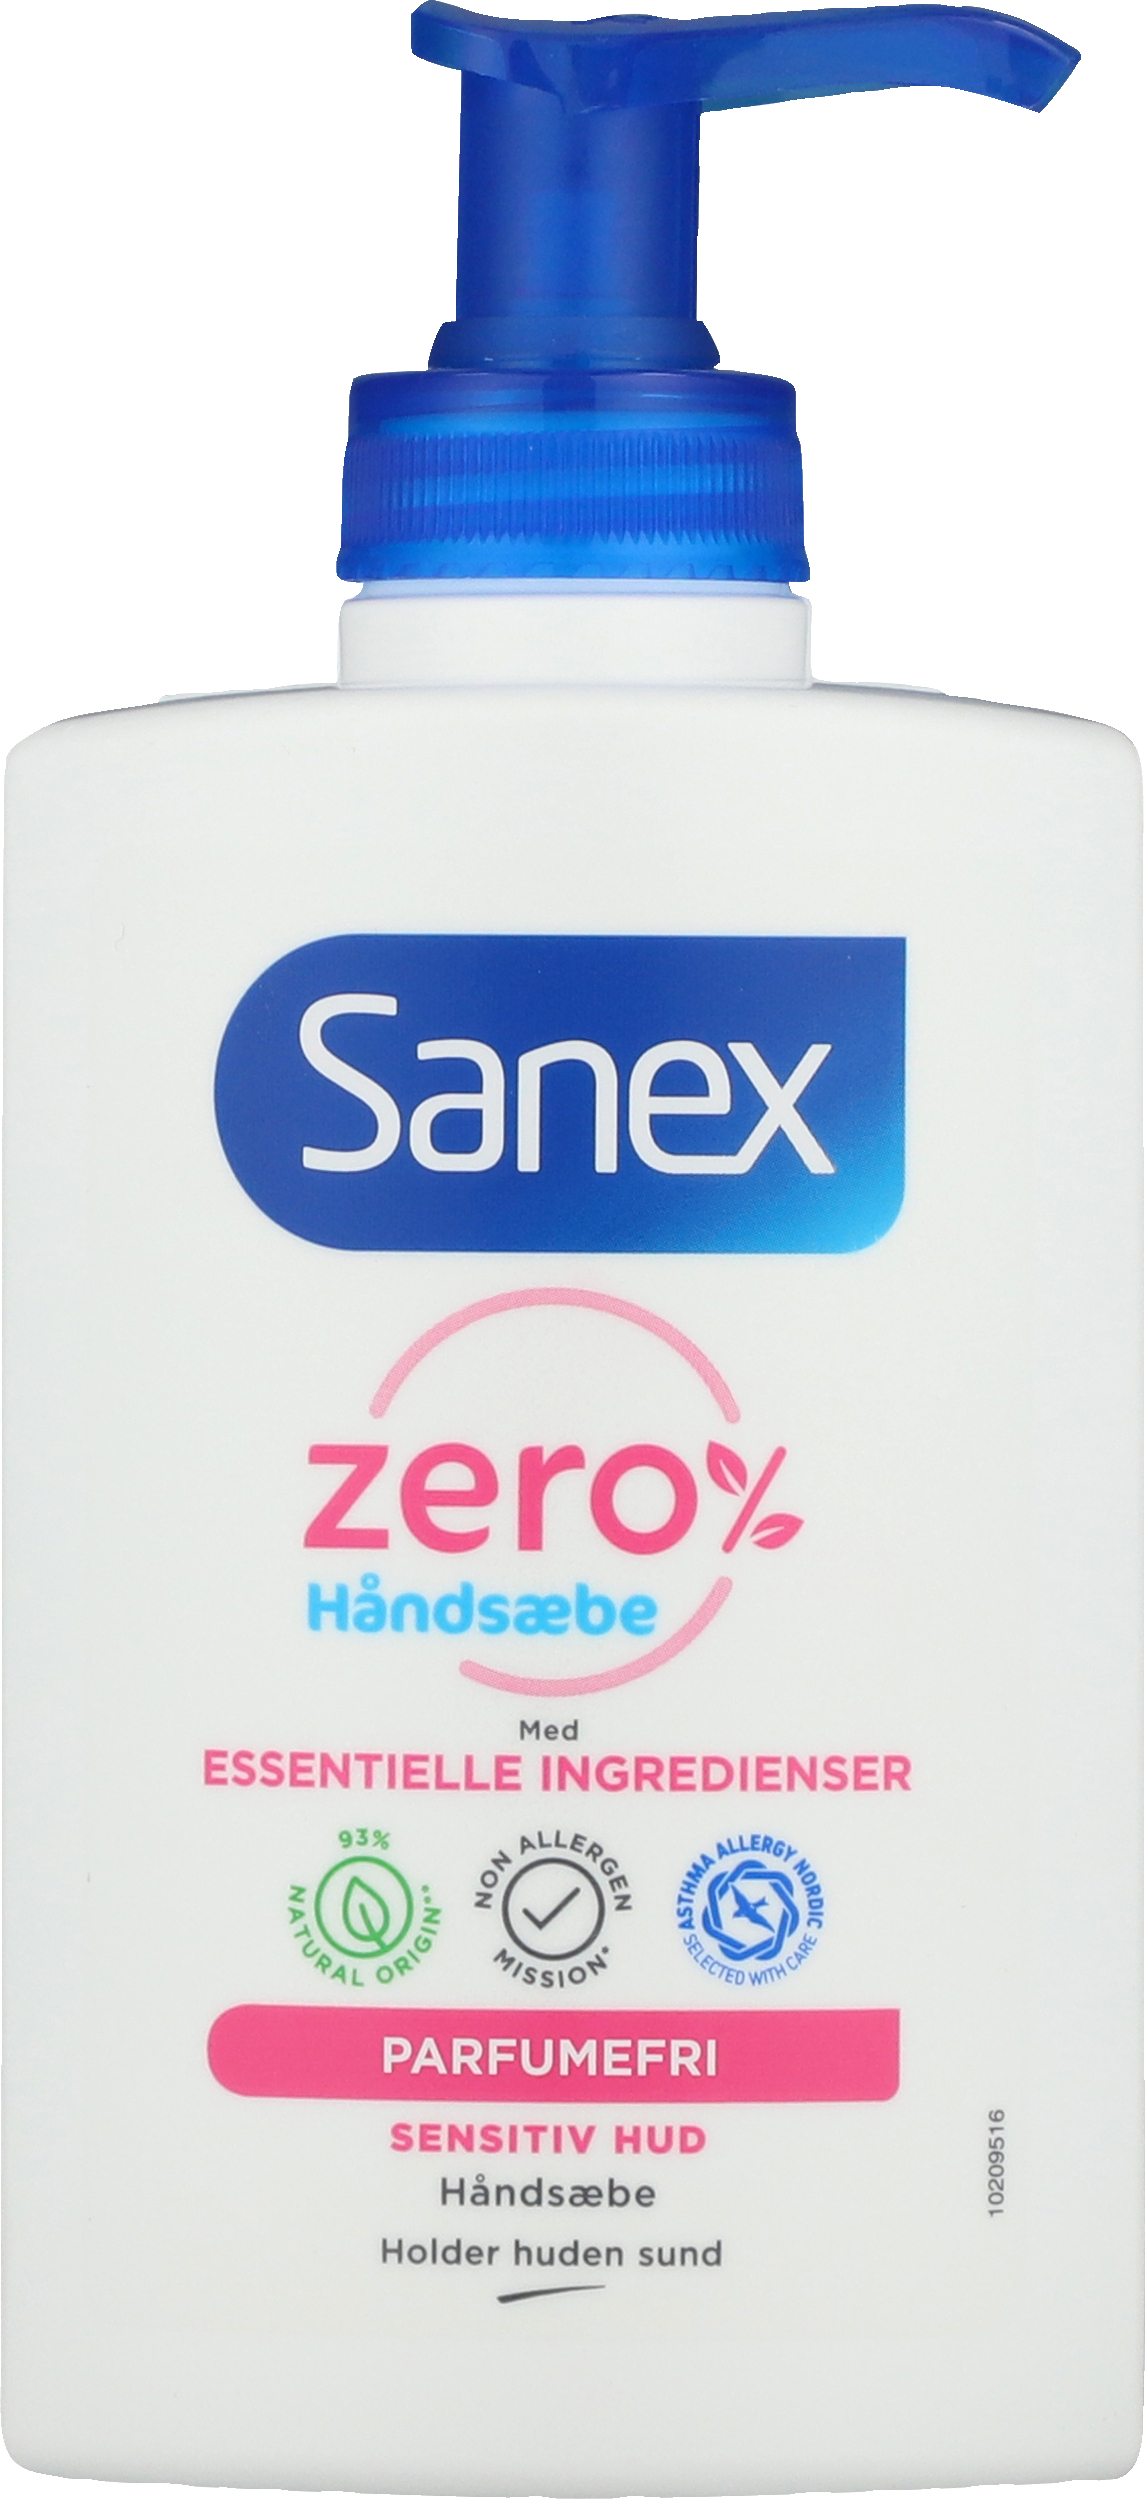 Sanex Flydende Zero 250 ml. - HUDPLEJE - MERE .DK